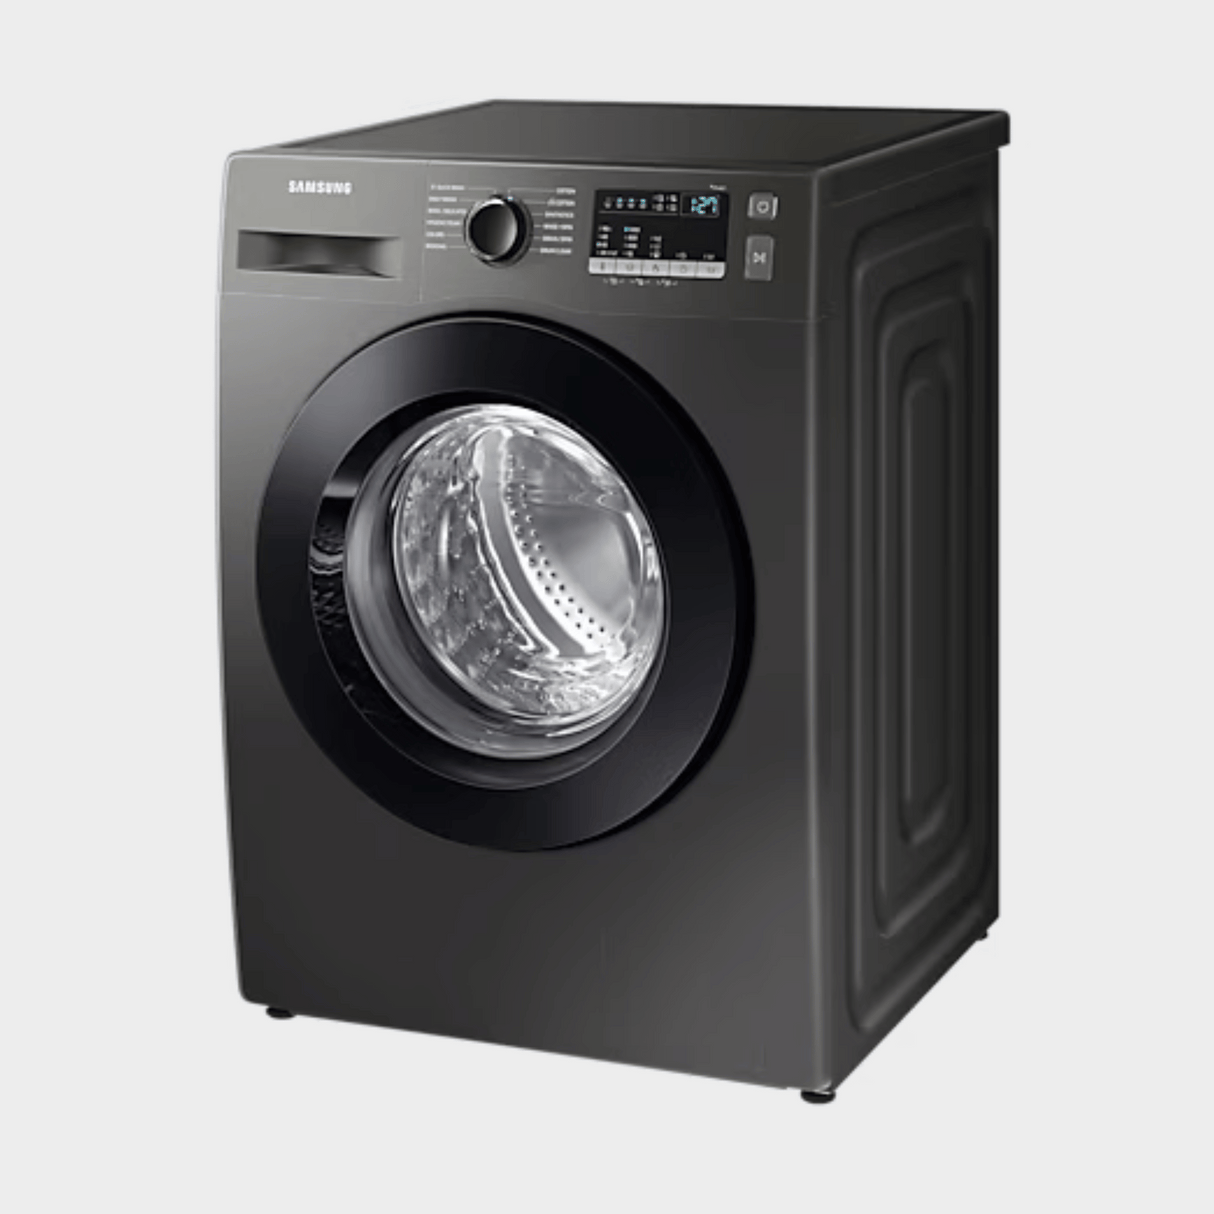 Samsung 7Kg Fully-Automatic Front-Load Washing Machine Appliance, WW70T4020CX/TL - Inox